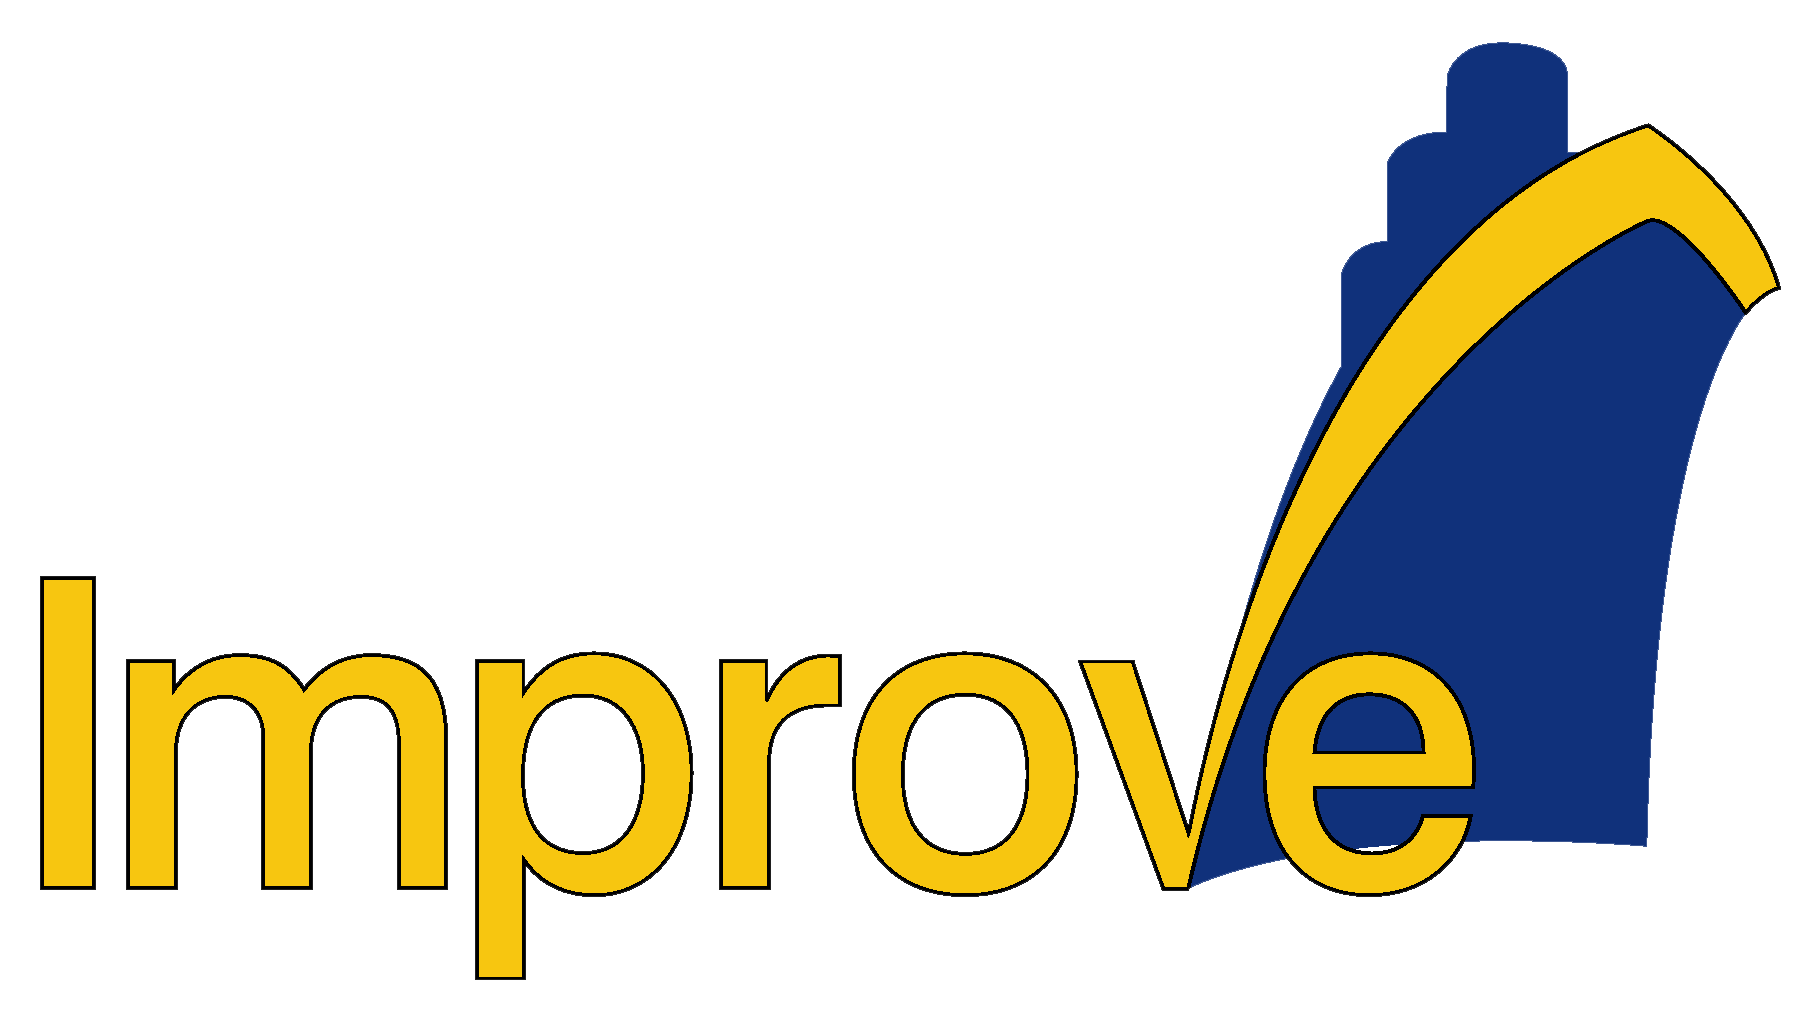 FP6 - IMPROVE Project logo